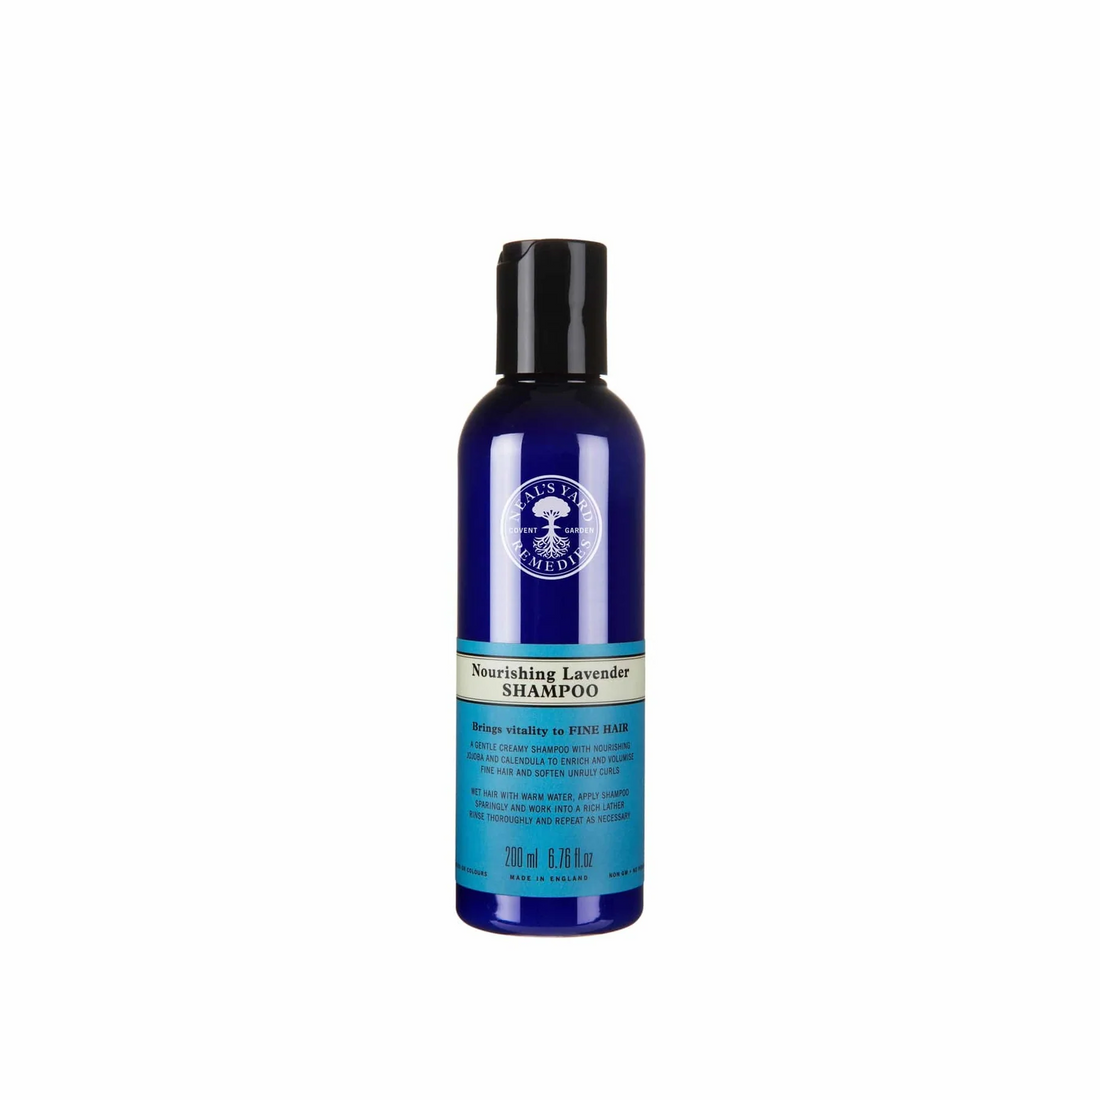 Nourishing Lavender Shampoo 200ml (BBE 11/24)